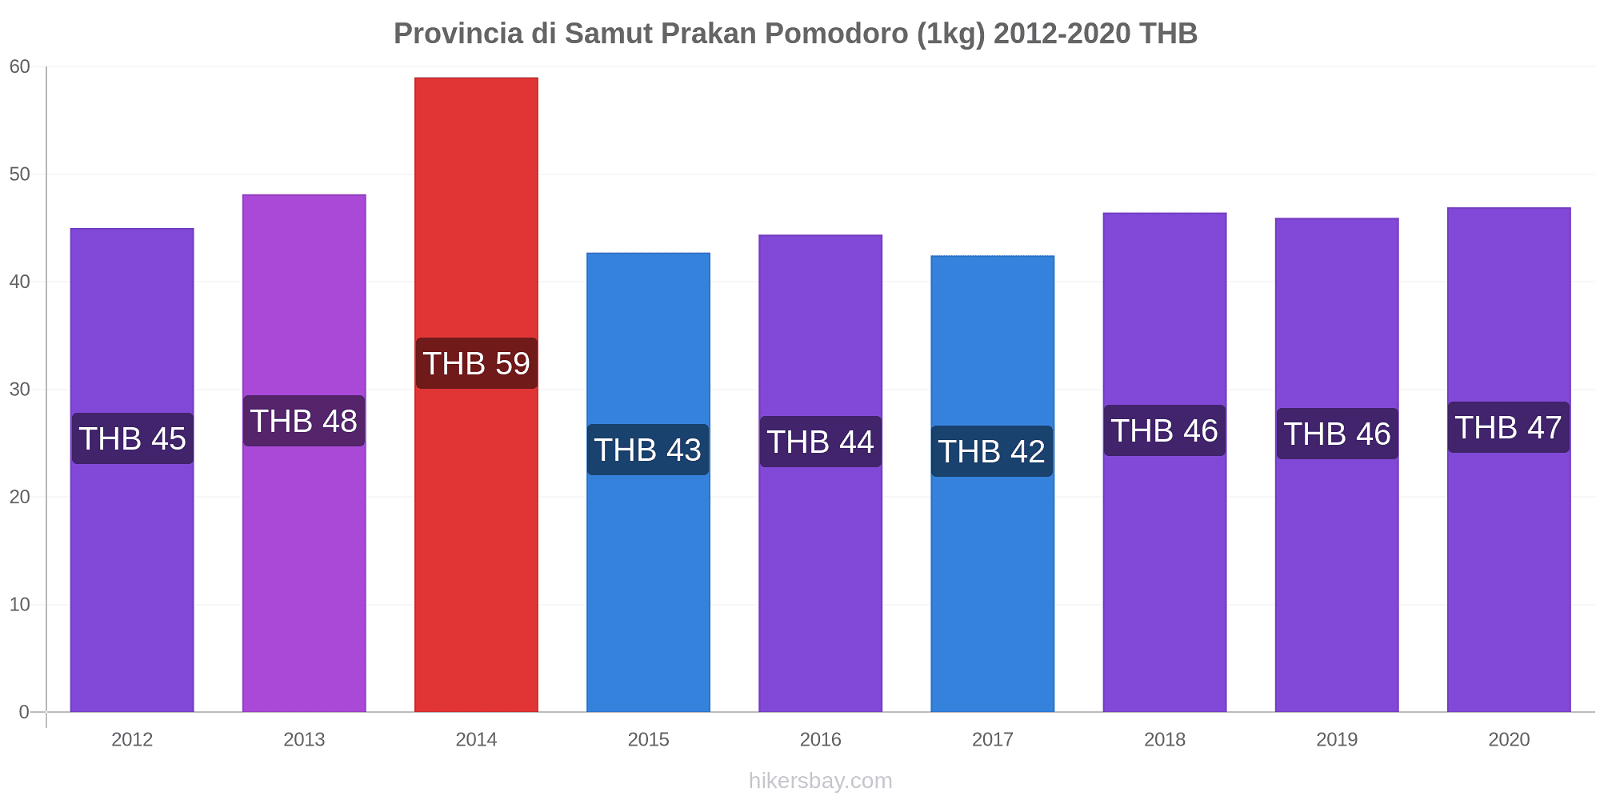 Provincia di Samut Prakan variazioni di prezzo Pomodoro (1kg) hikersbay.com